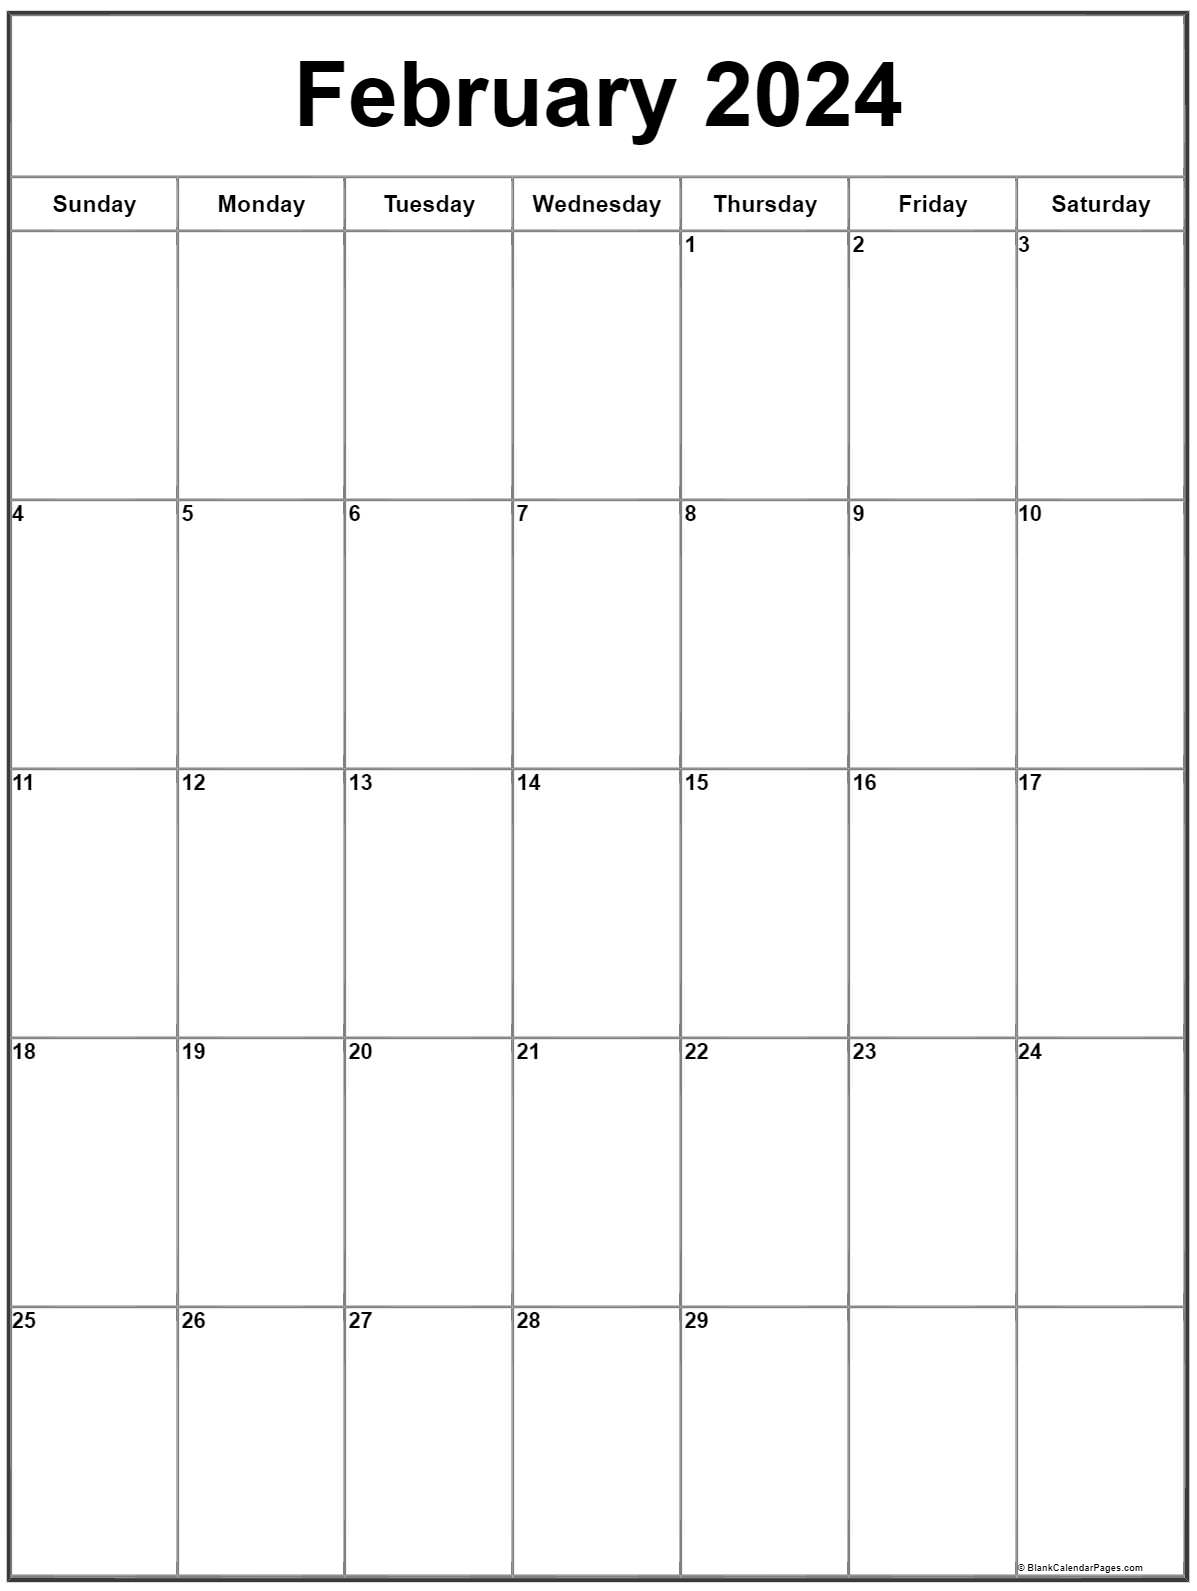 Feb 2024 Calendar Printable Free - Easy to Use Calendar App 2024